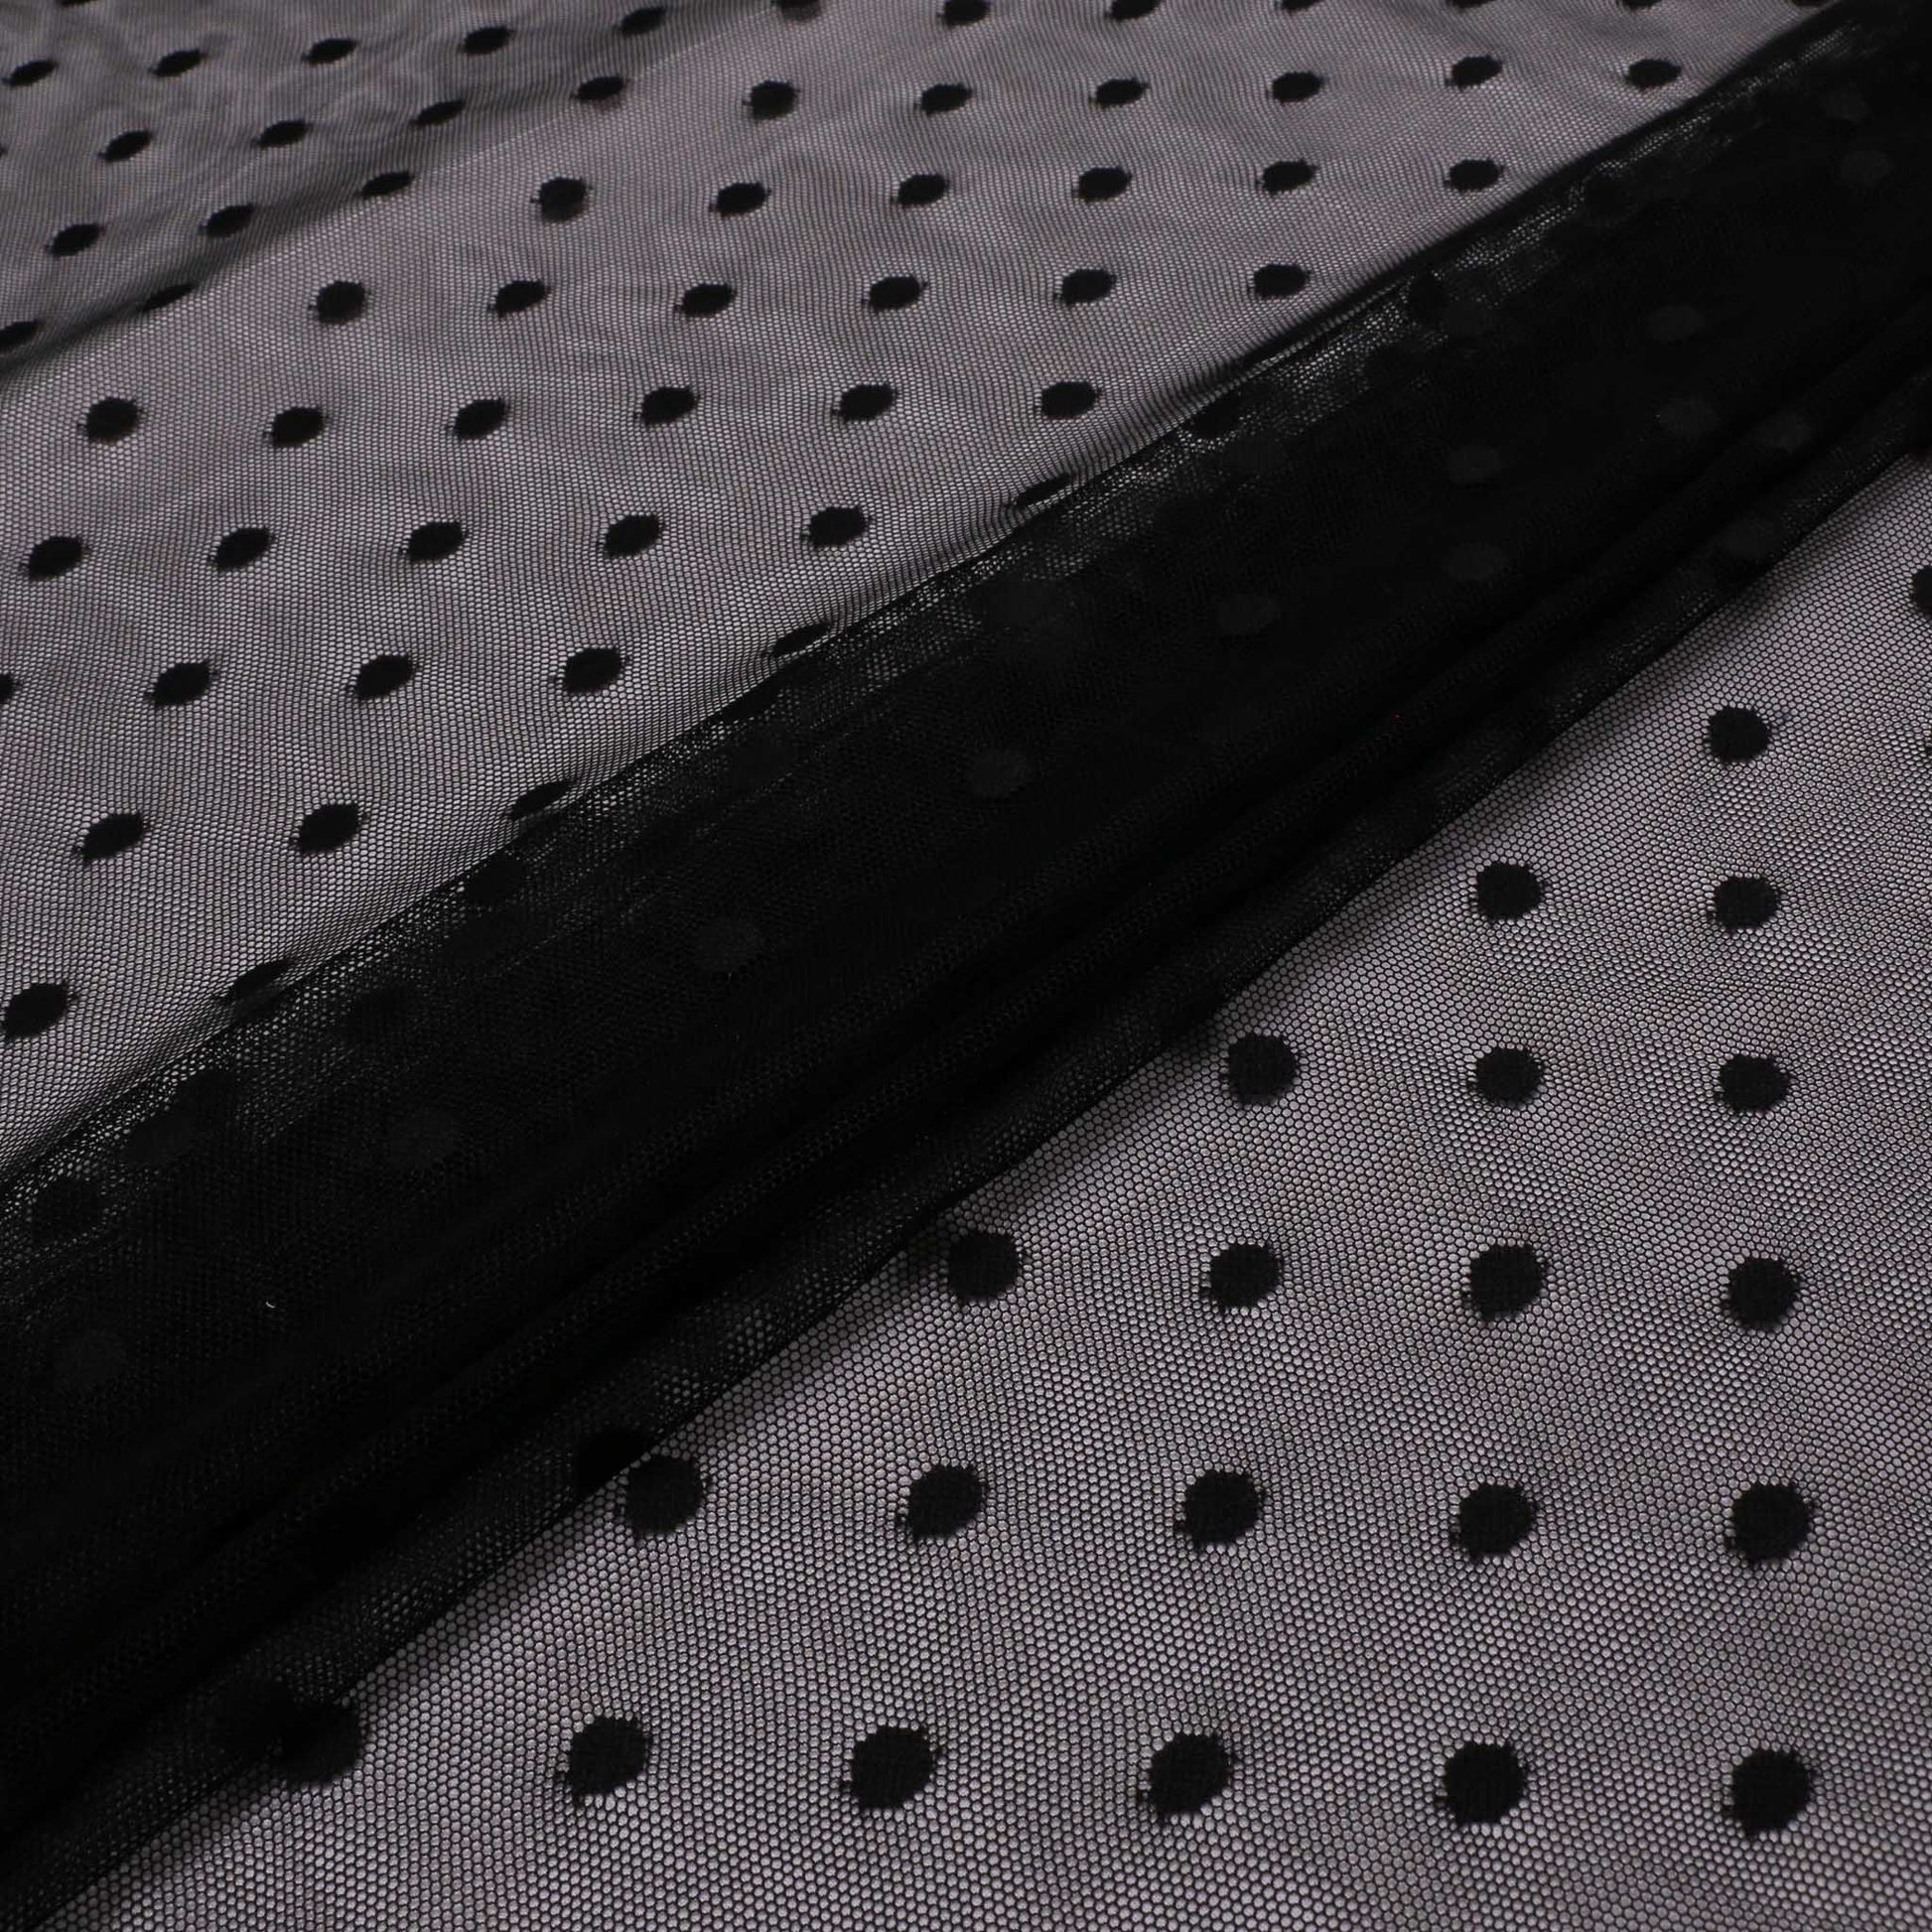 black folded netting fabric with polka dot pattern